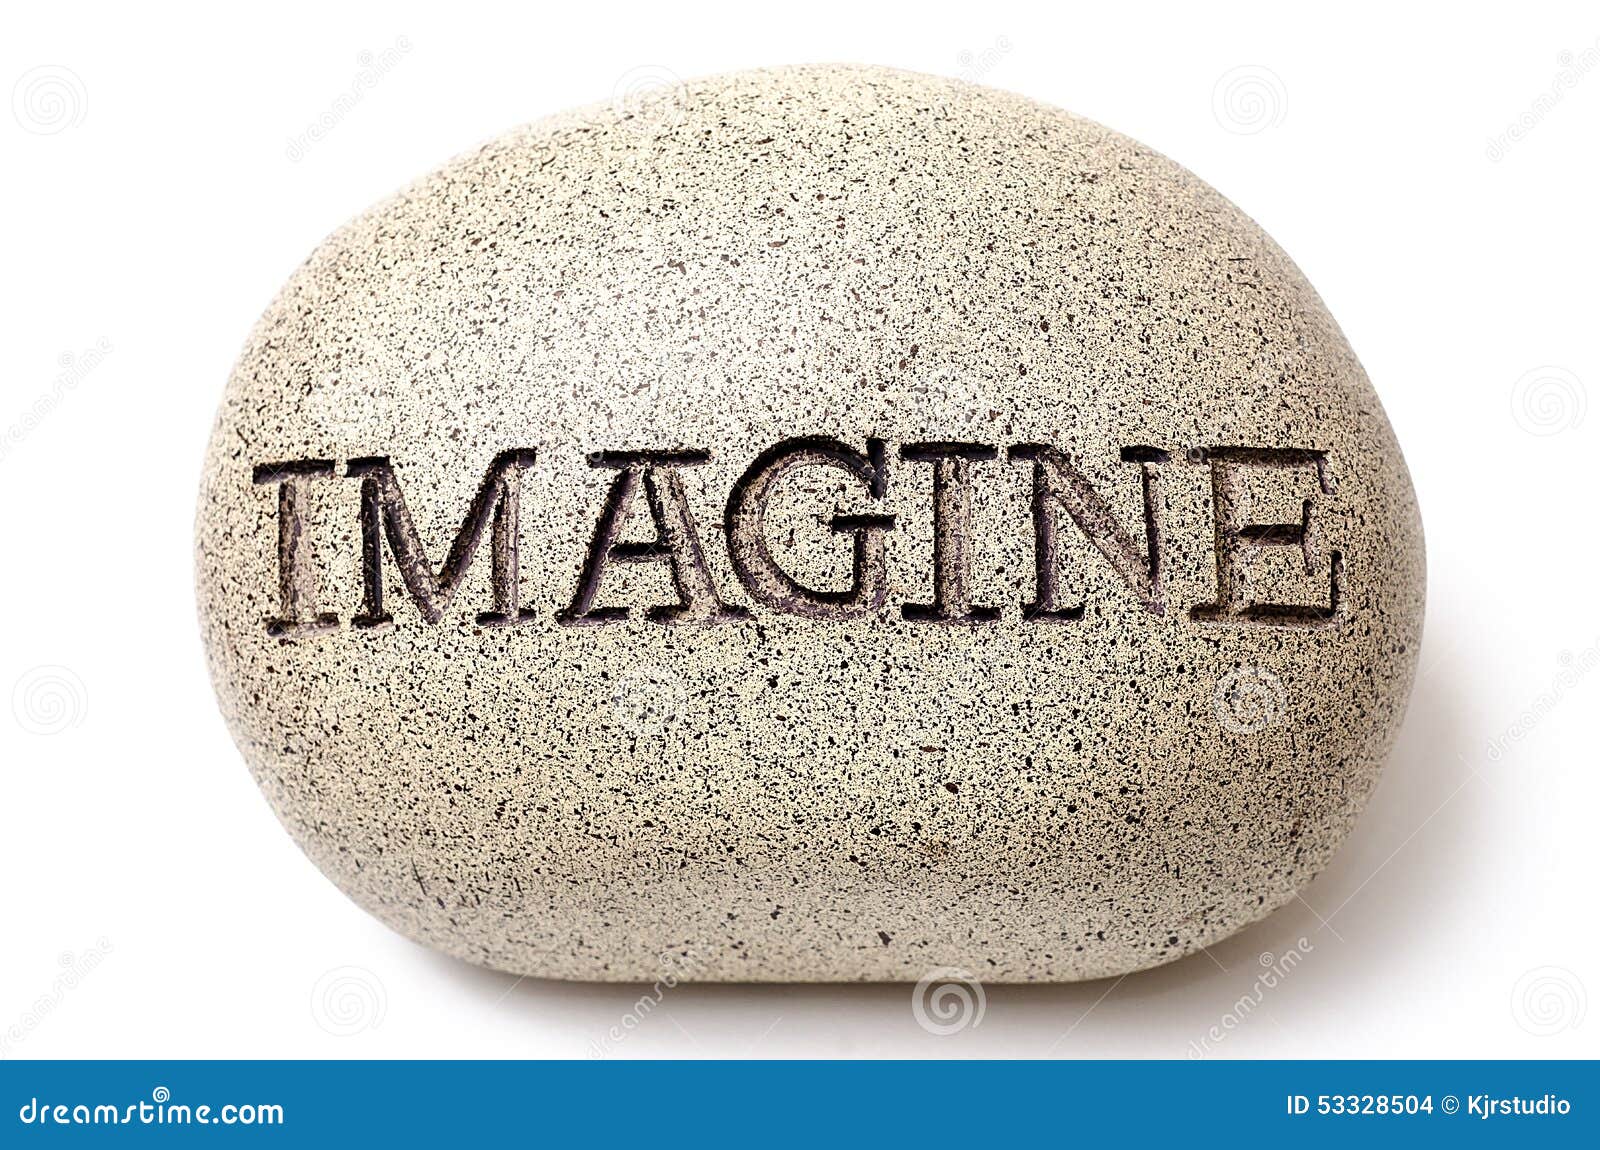 imagine engraved on a rock.